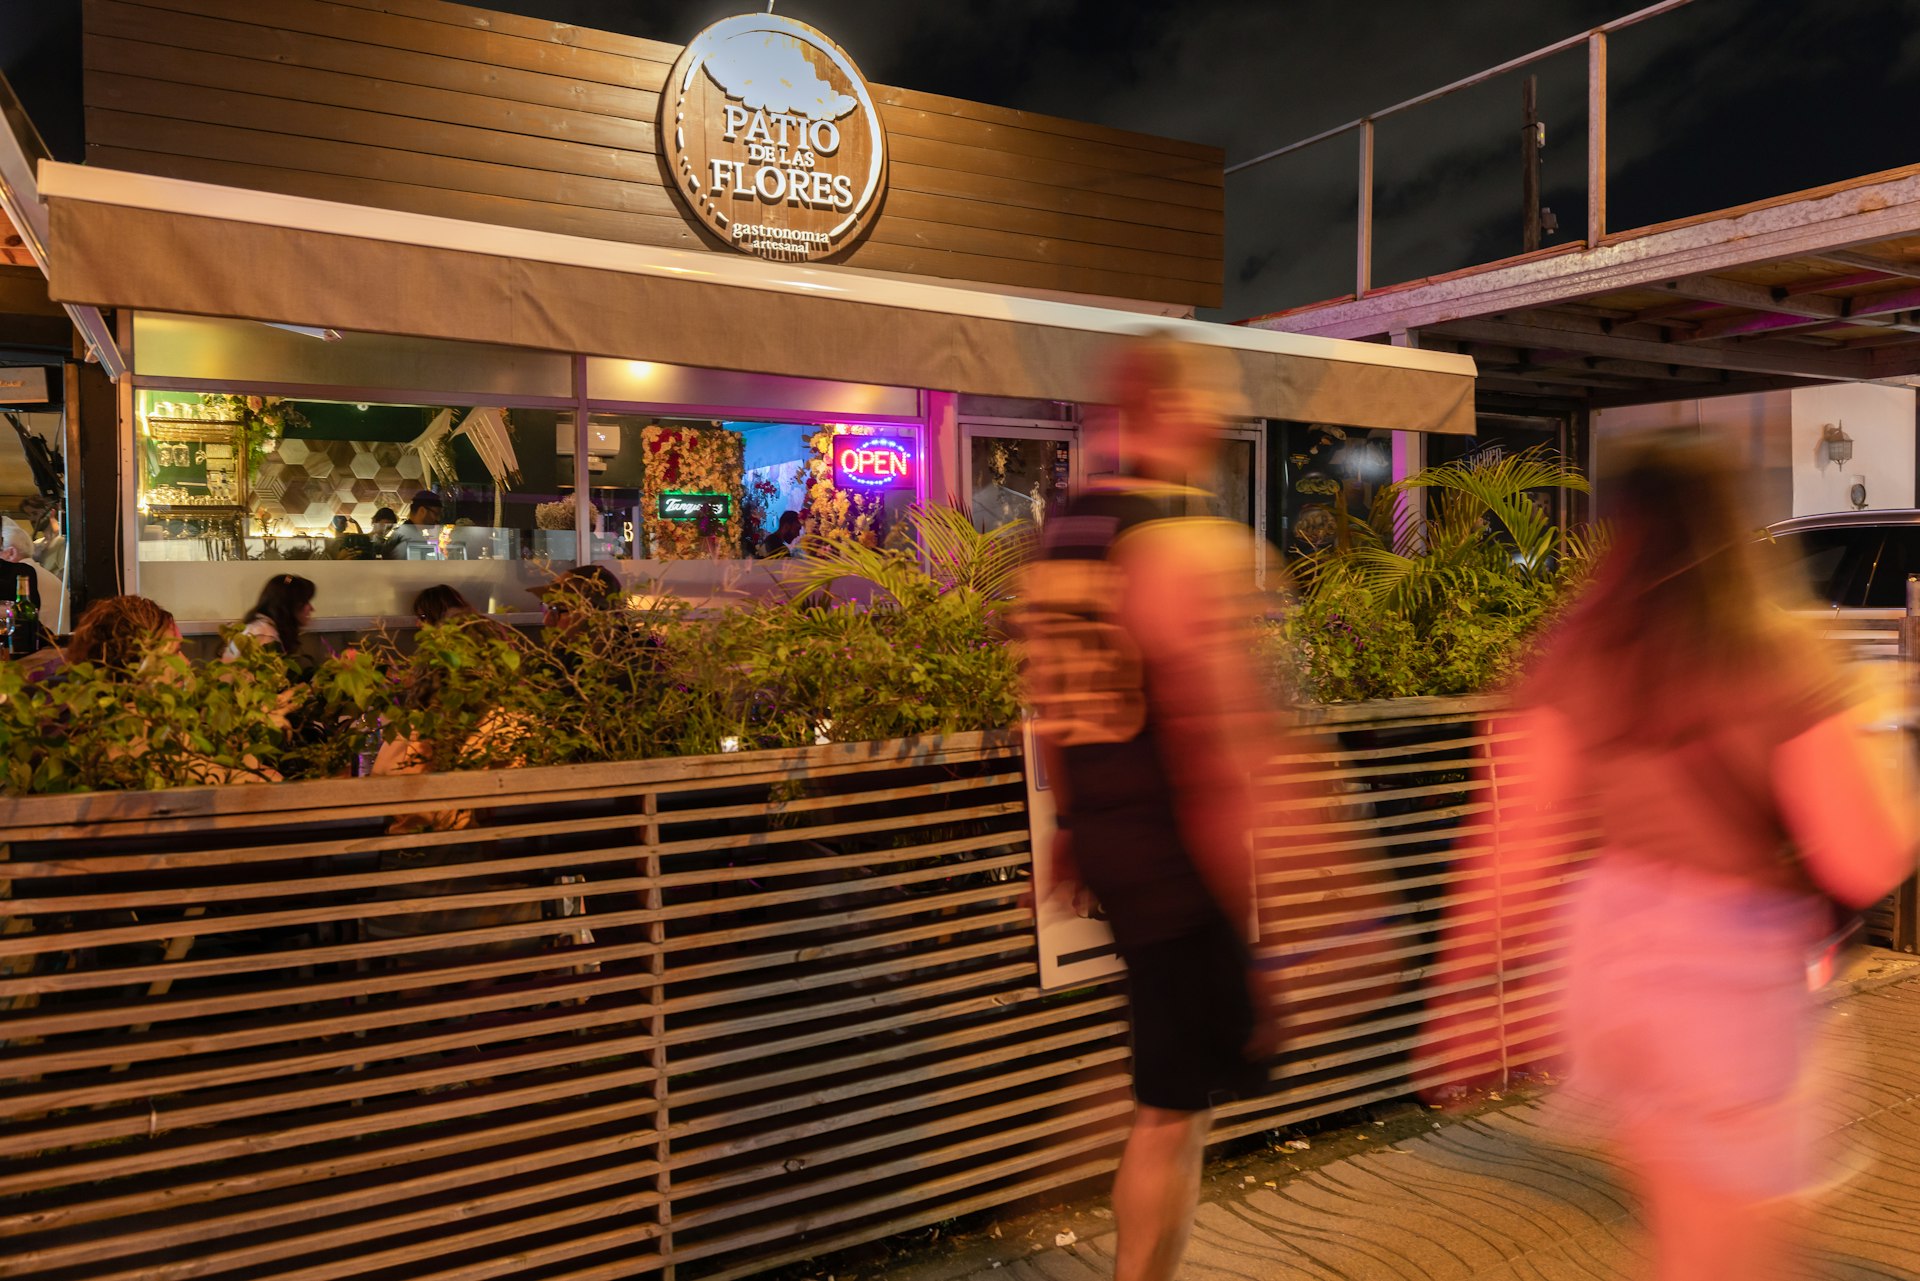 Blurred people walk past the exterior of Patio de las Flores cocktail bar in San Juan, Puerto Rico